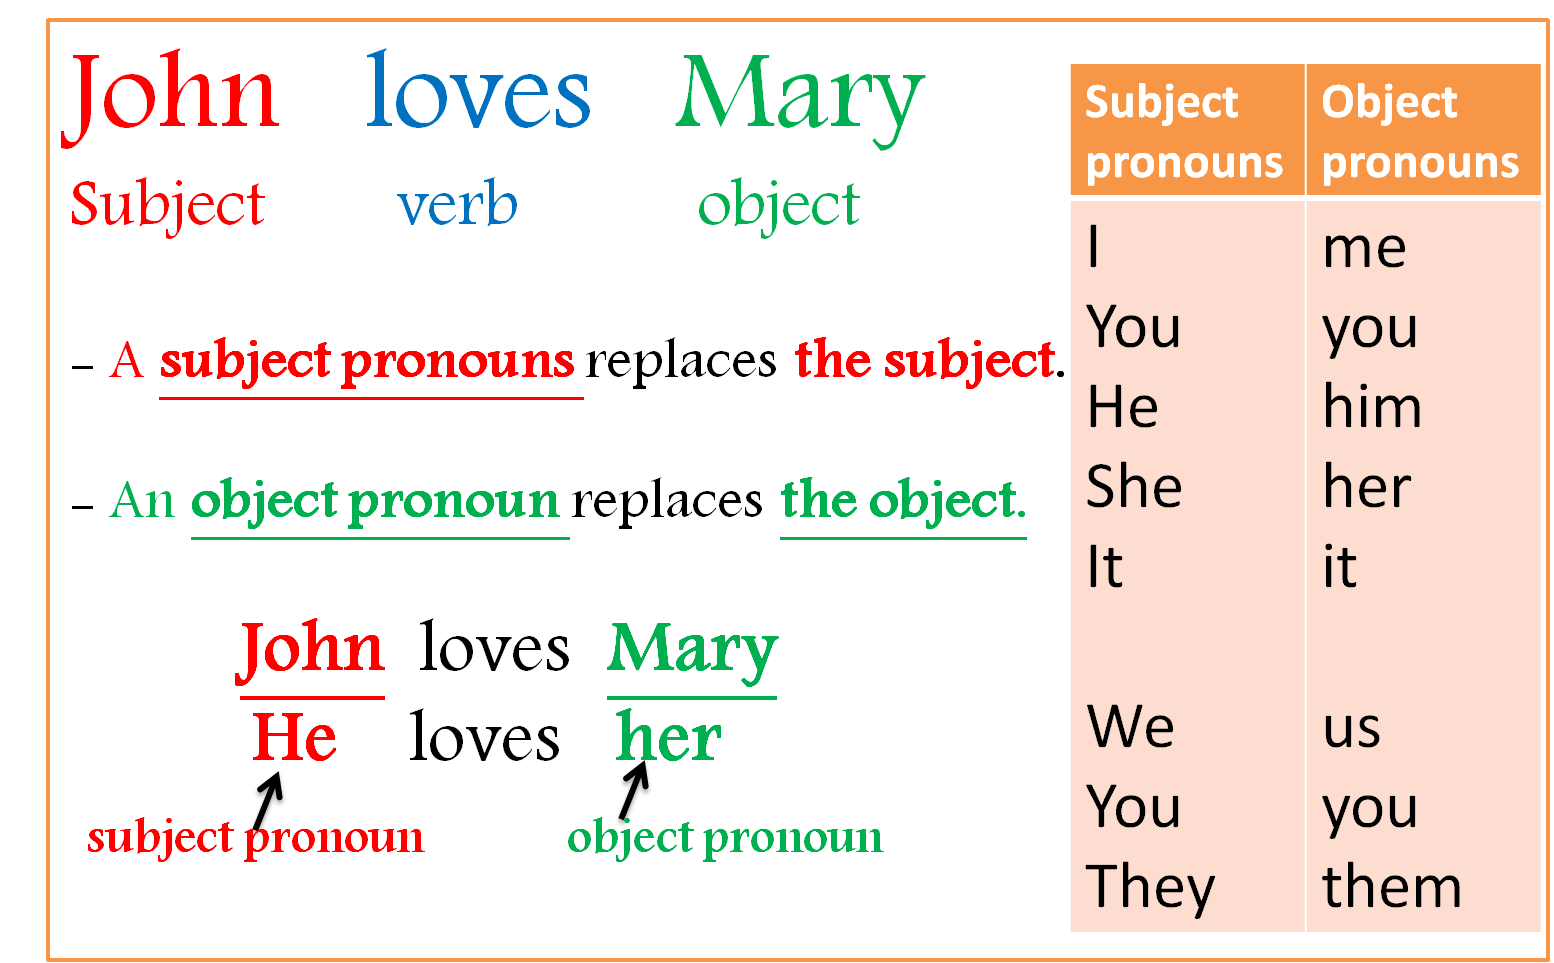 Personal object pronouns в английском. Объектные местоимения в английском. Местоимения объектного падежа в английском. Объектные местоимения в английском языке таблица. Personal object